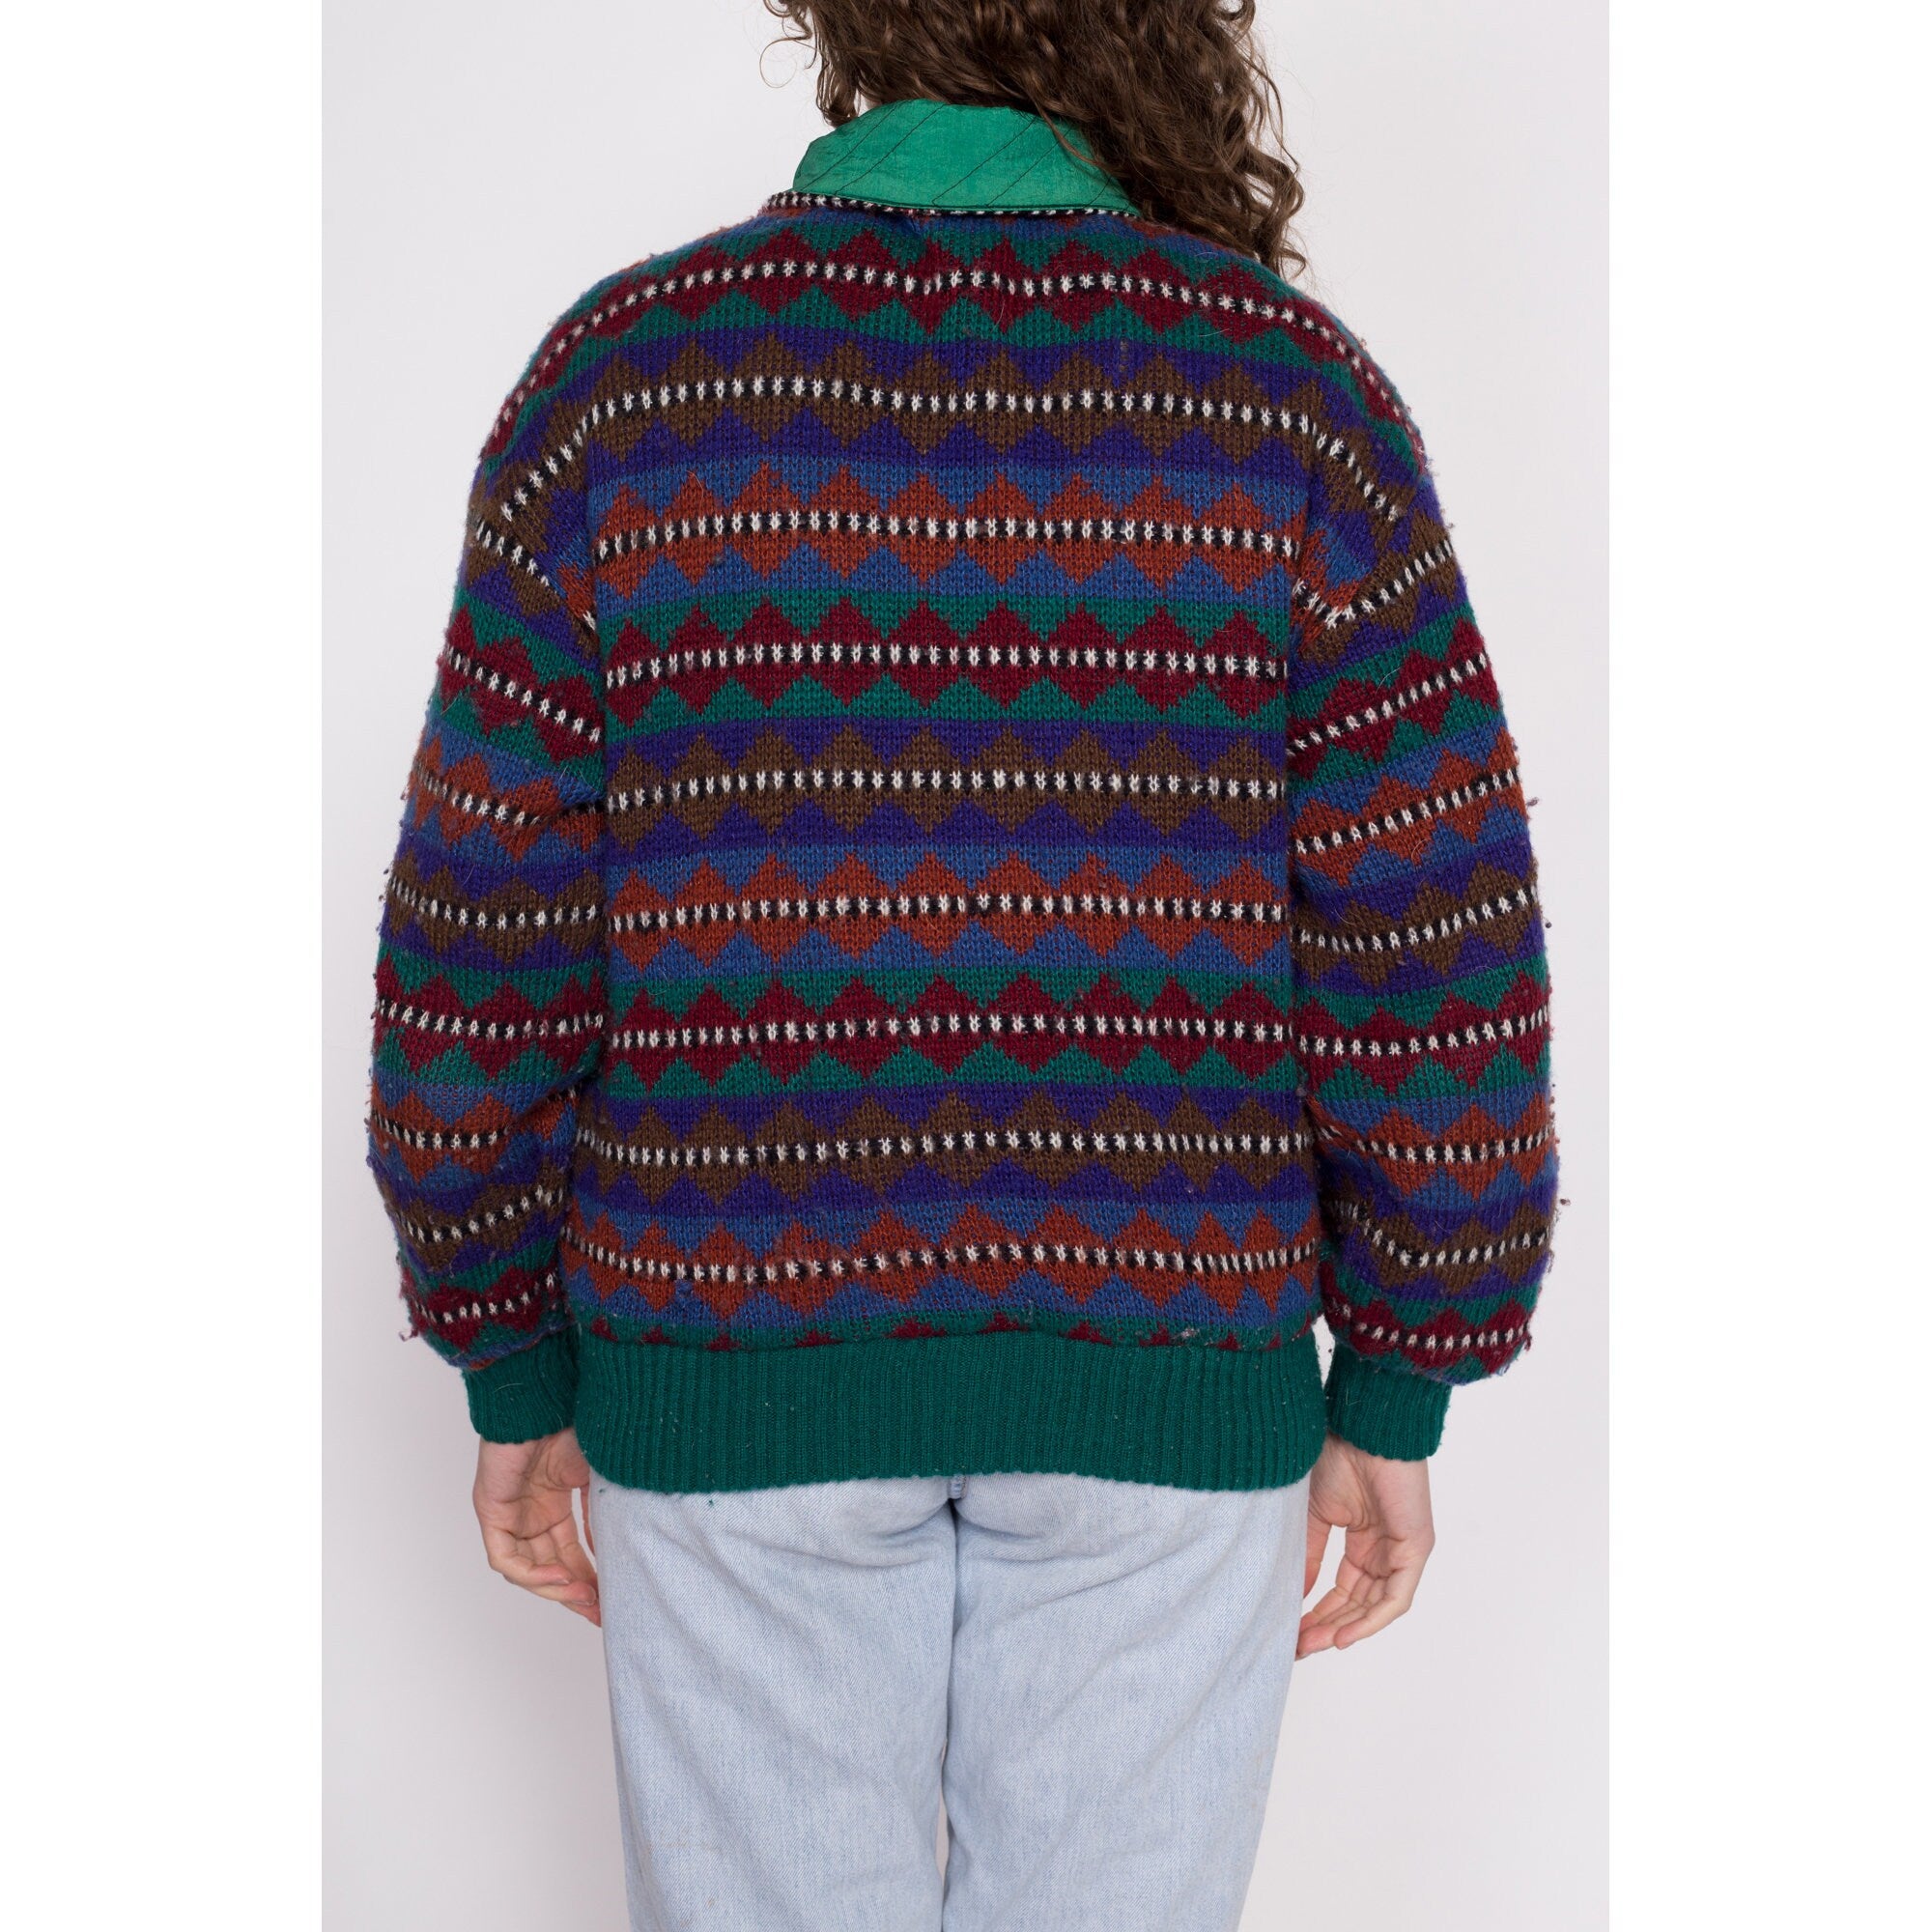 80s Color Block & Geometric Knit Reversible Jacket - Large